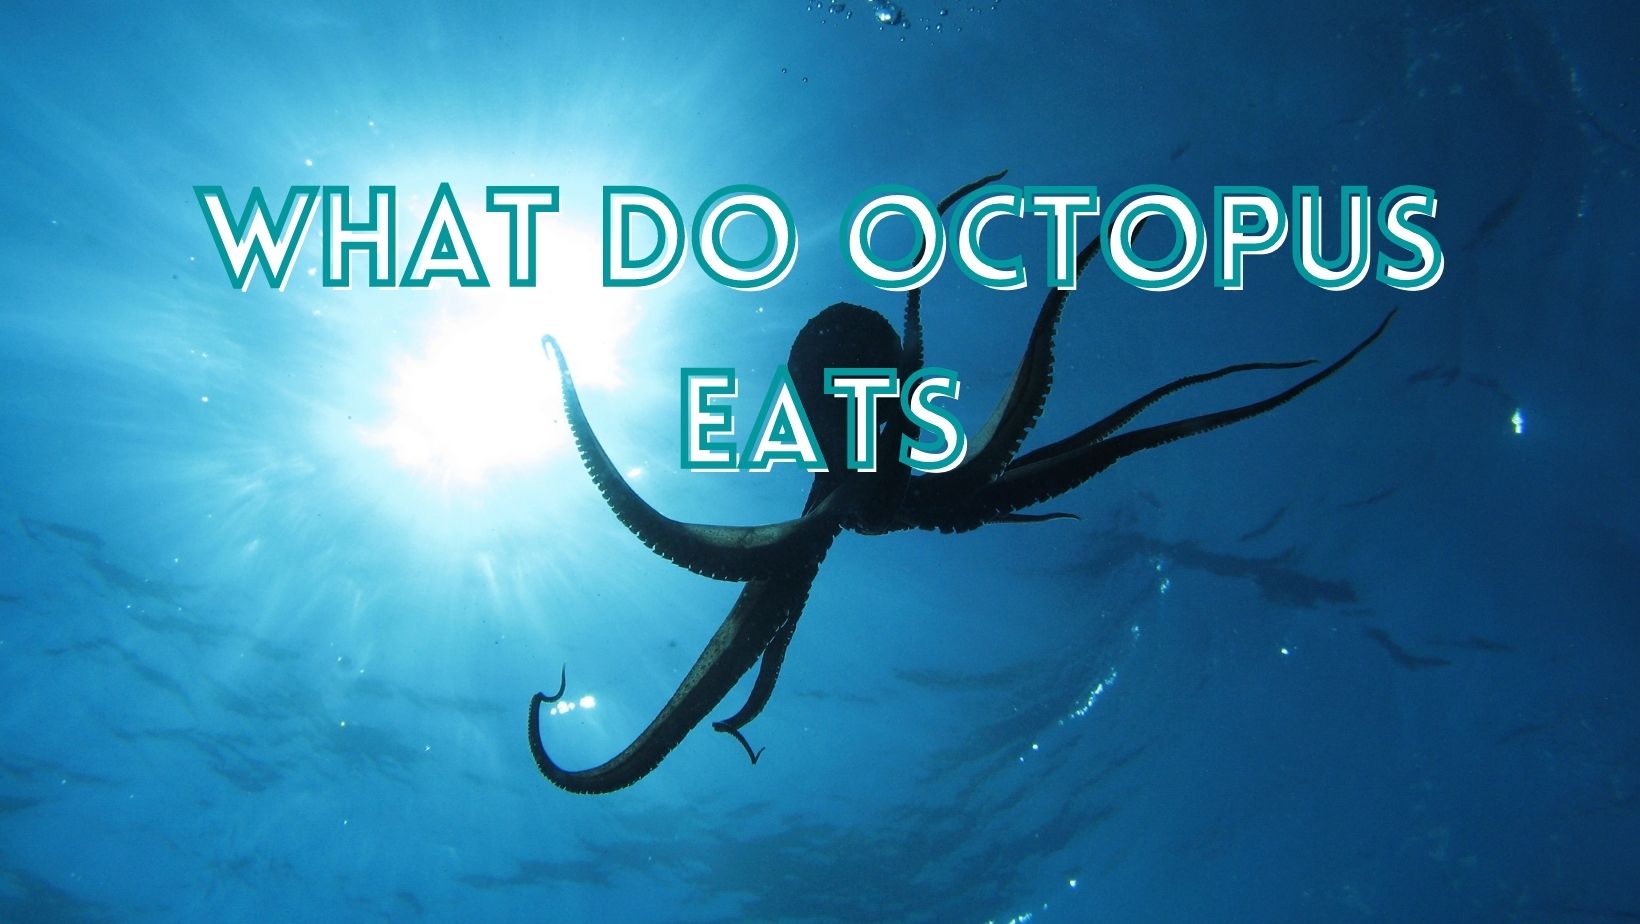 What do octopus eats